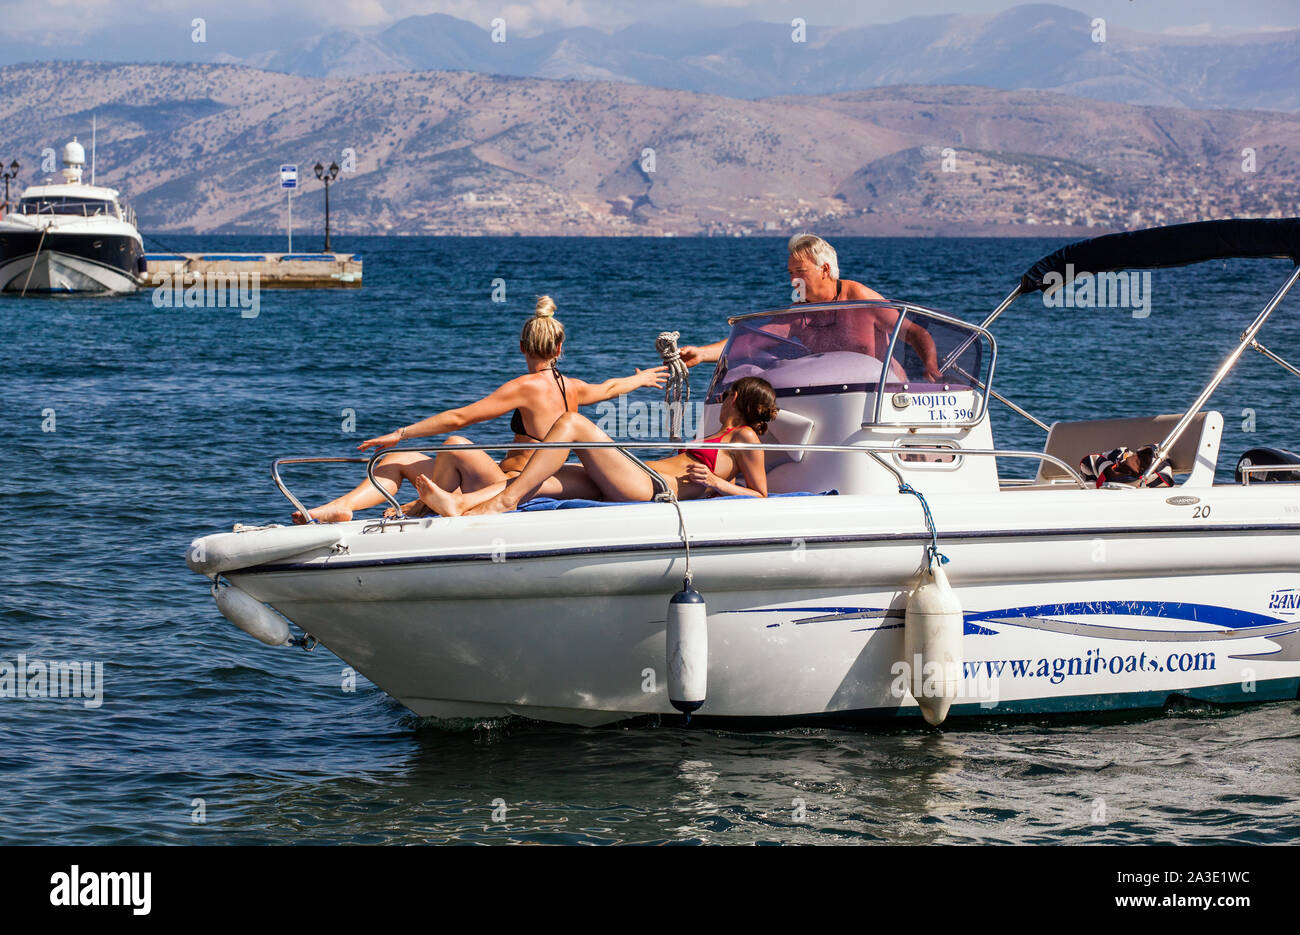 Hot girls boating in bikini Bikini Girls On Boat High Resolution Stock Photography And Images Alamy